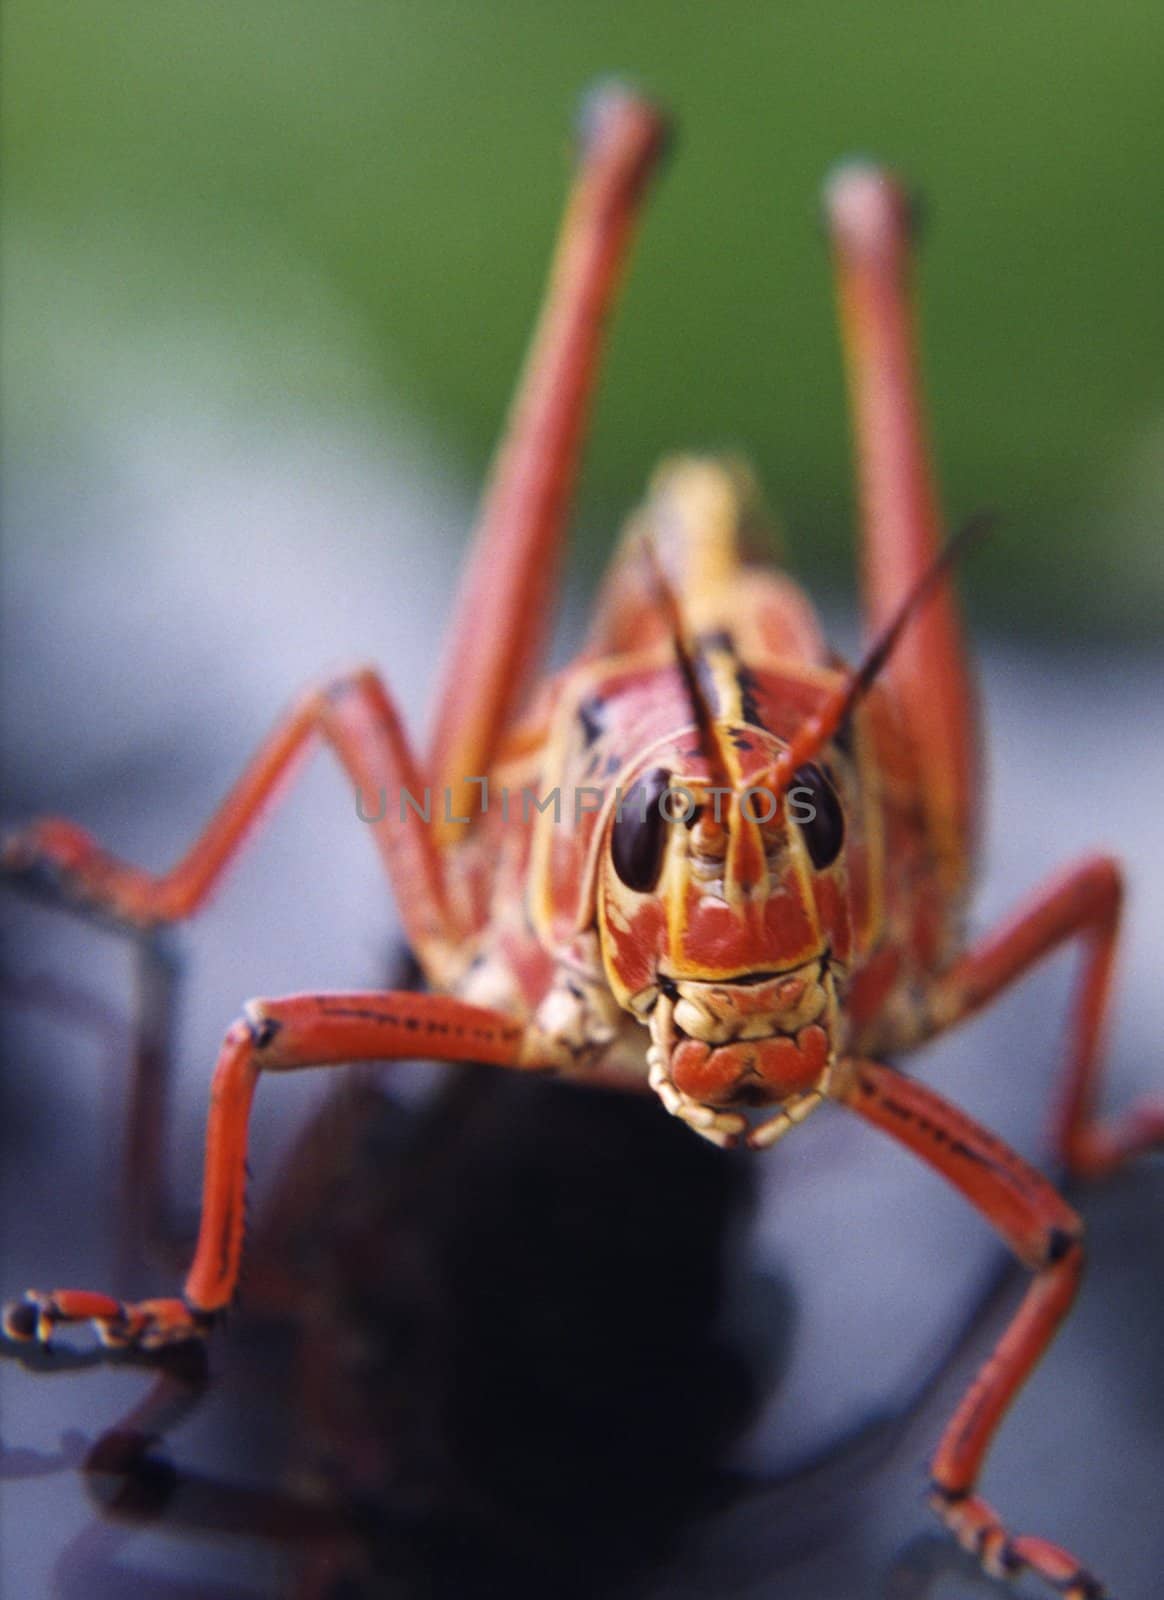 Grasshopper Close Up  by DirkWestphal